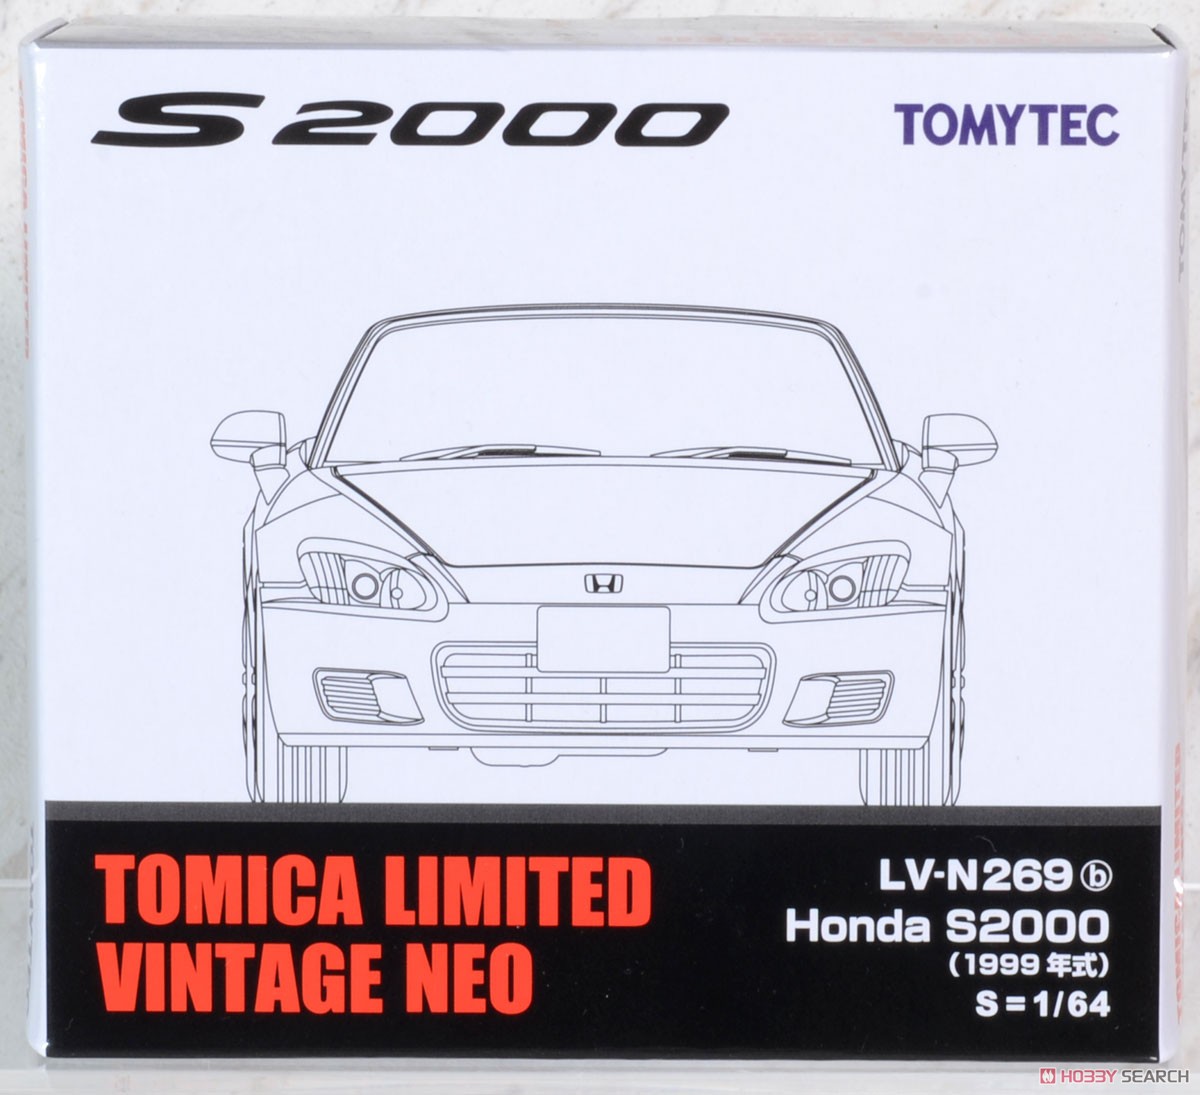 TLV-N269b ホンダS2000 99年式 (白) (ミニカー) パッケージ1